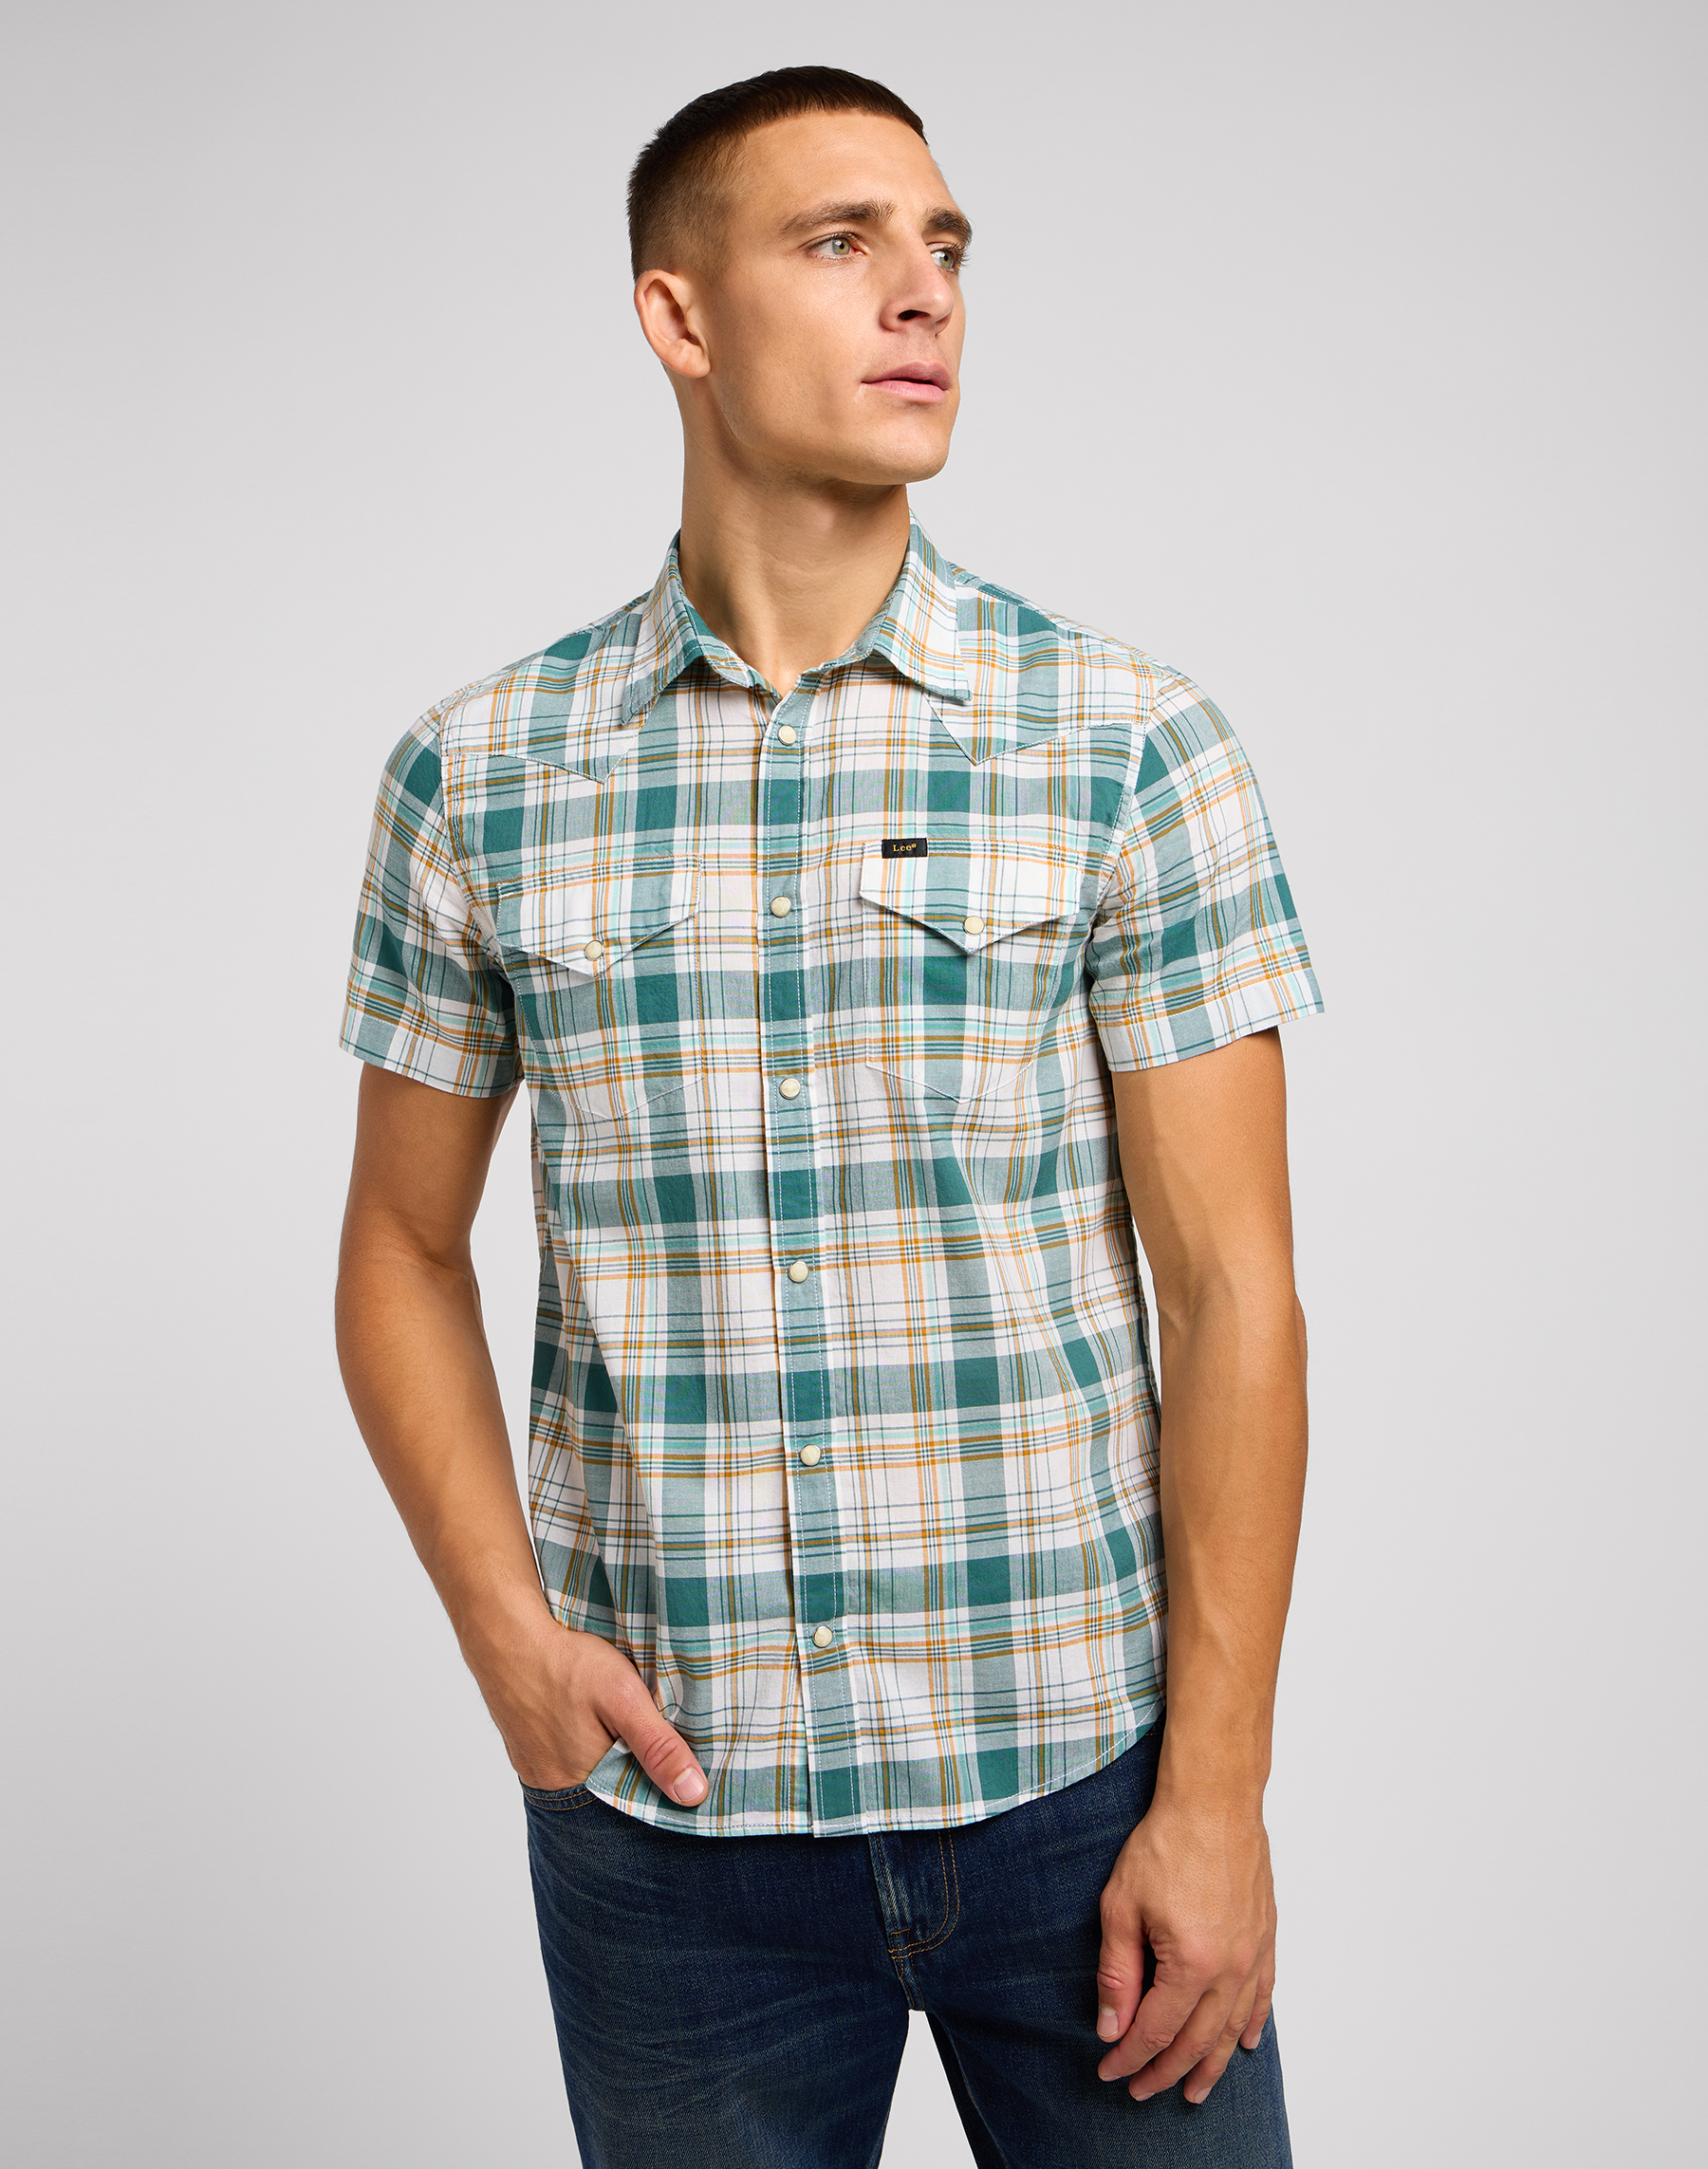 Lee Western Shirt - Evergreen Medium